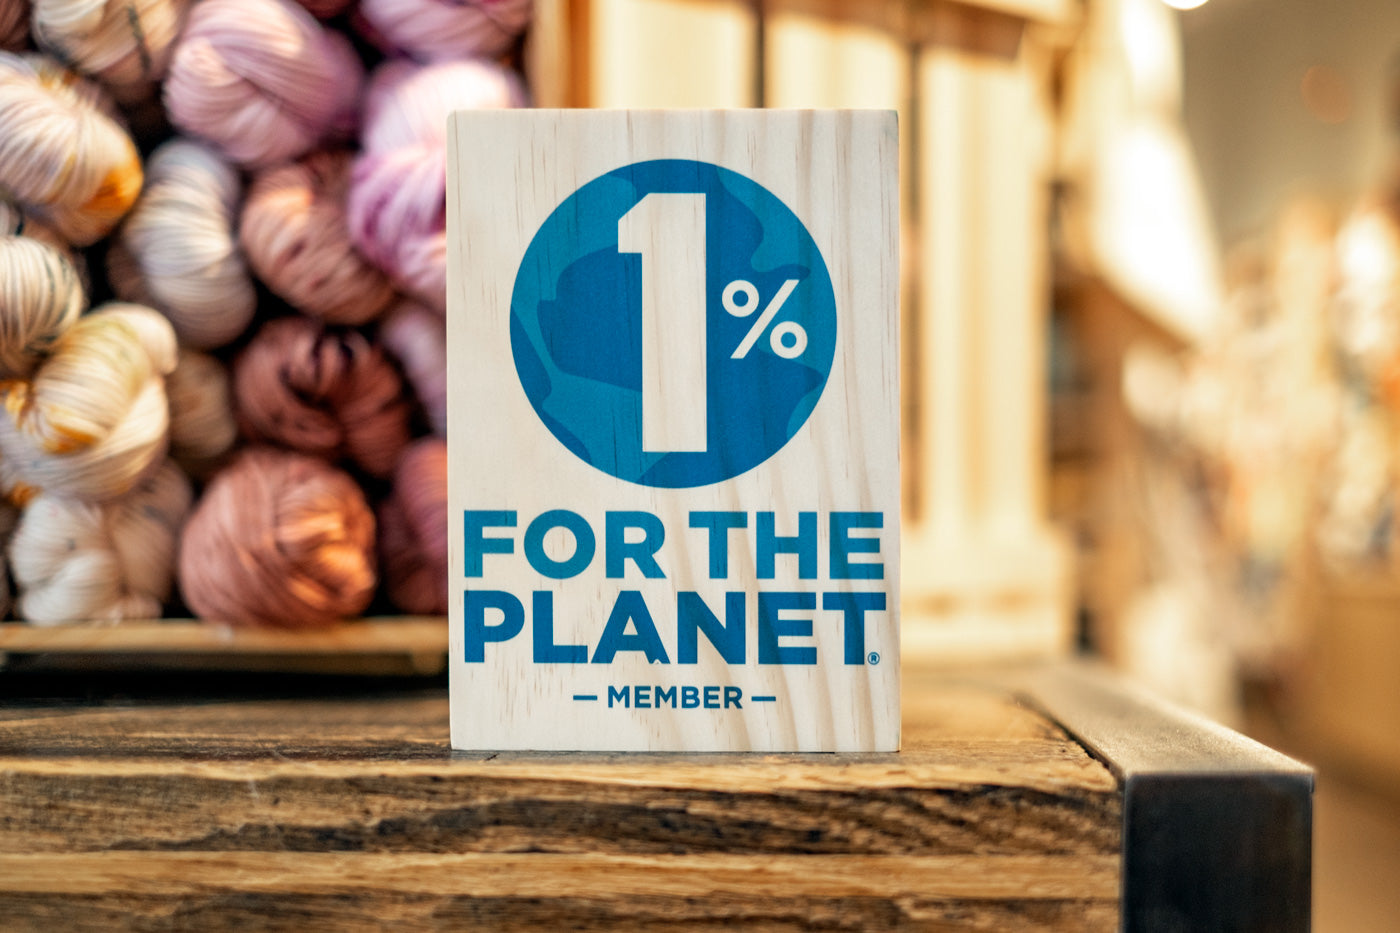 1% for the planet program plaque